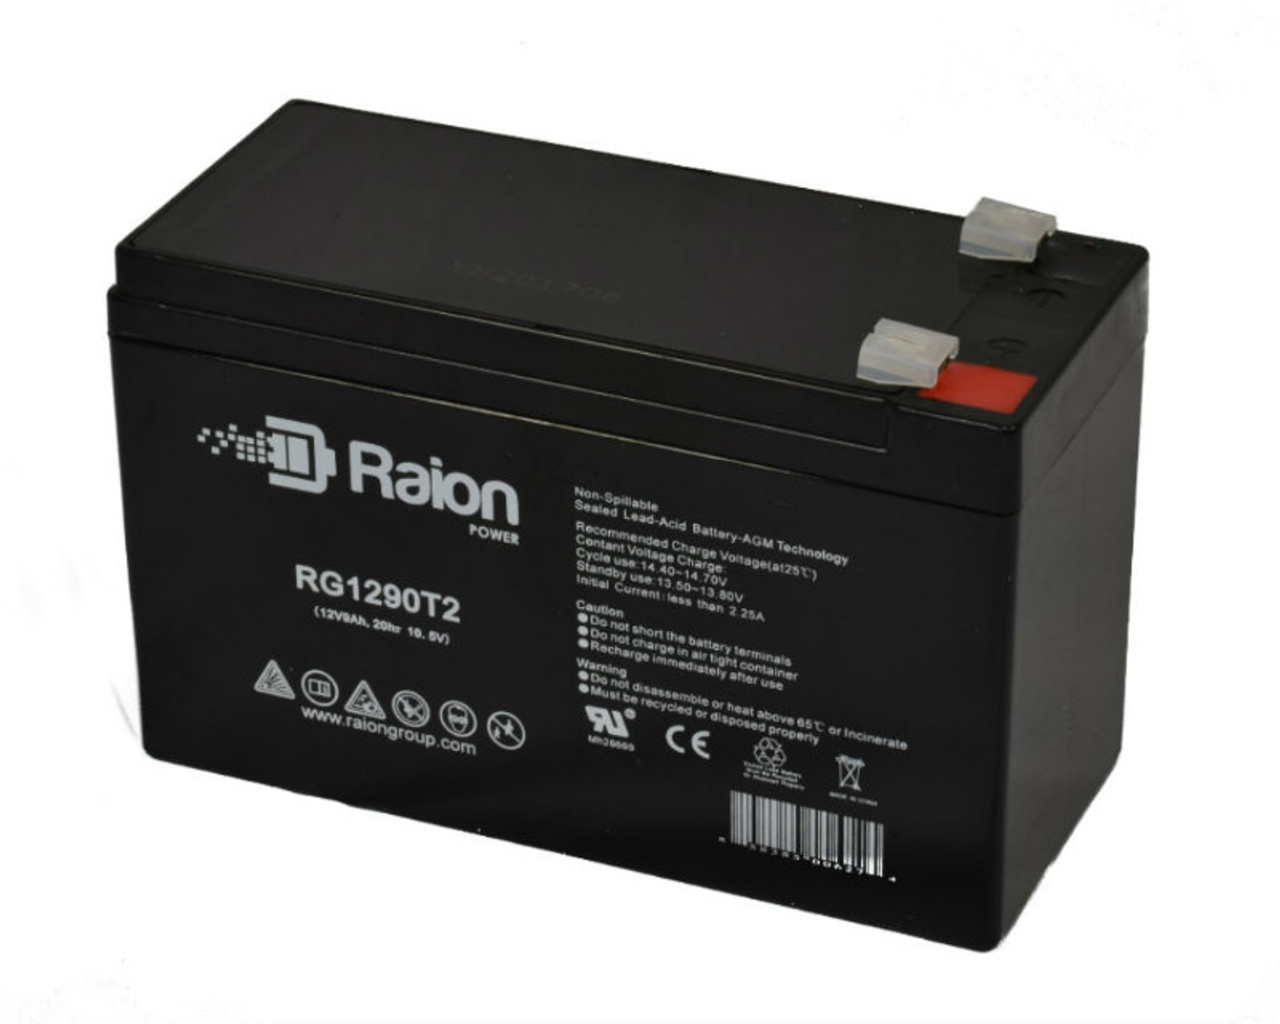 Raion Power RG1290T2 12V 9Ah AGM Battery for BSB GB12-9A